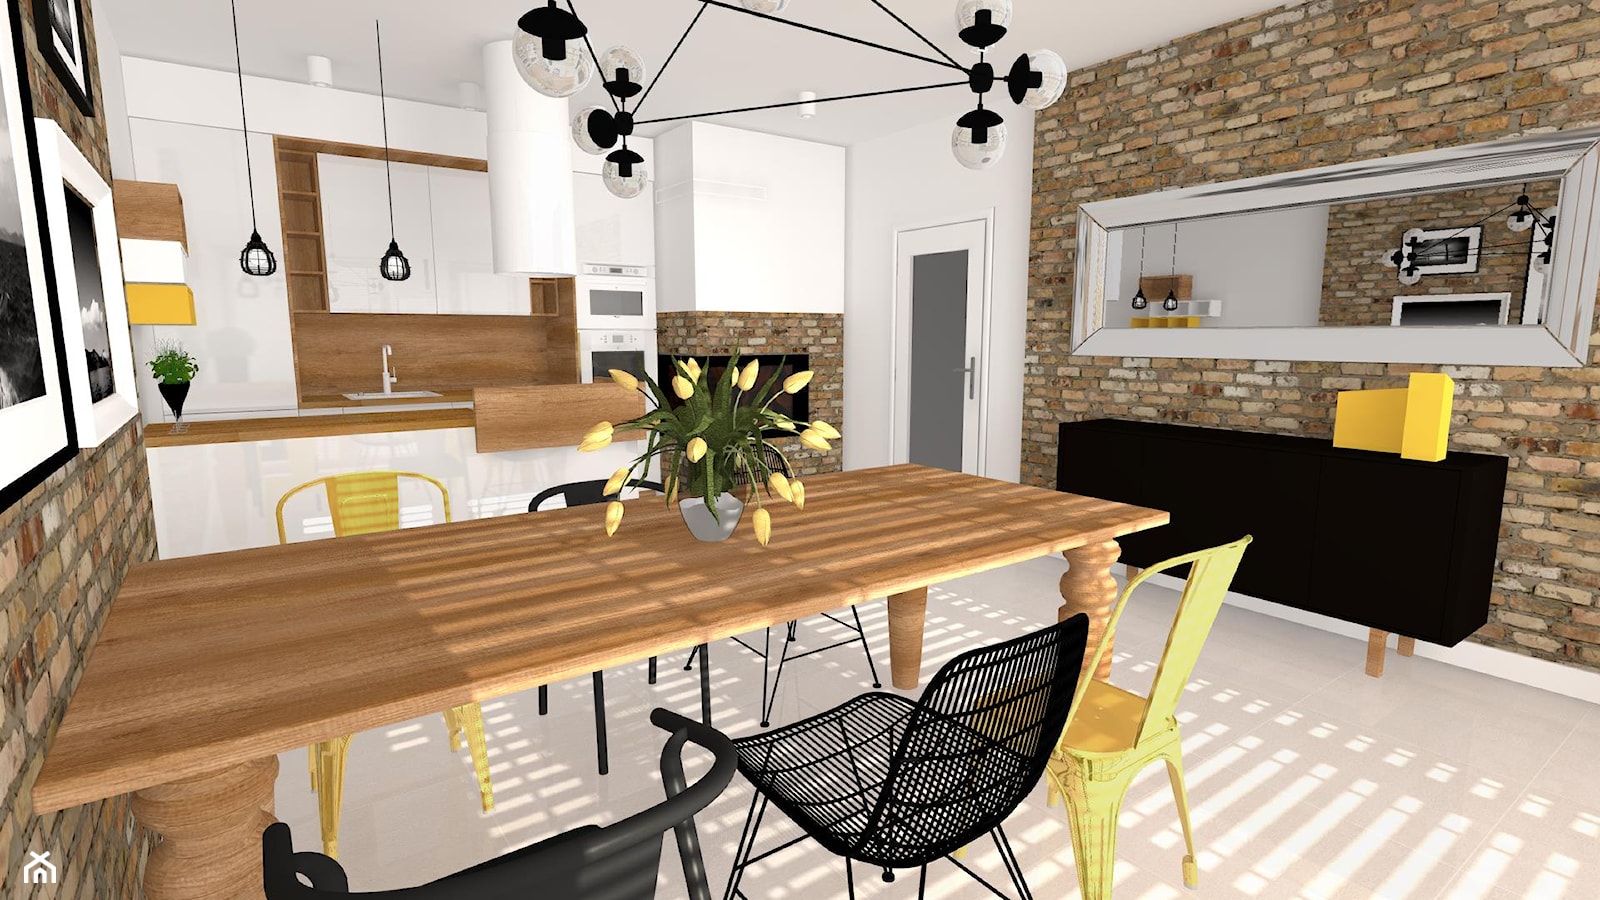 Projekt kuchni, jadalni i salonu - Średnia szara jadalnia w kuchni, styl skandynawski - zdjęcie od Cube - Homebook